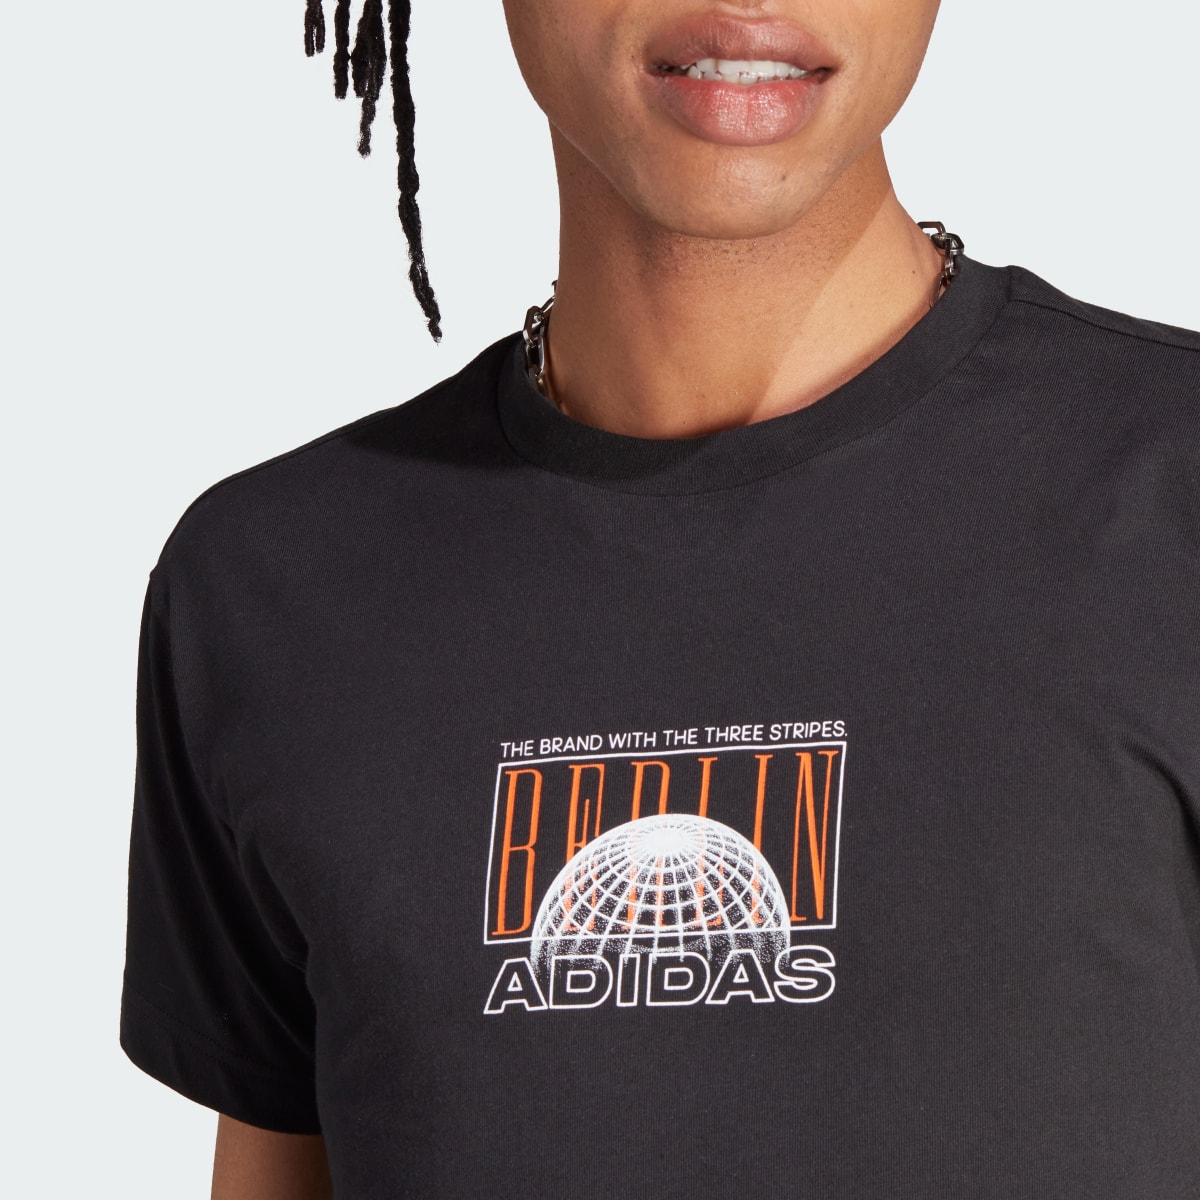 Adidas Graphic T-Shirt (Gender Neutral). 6